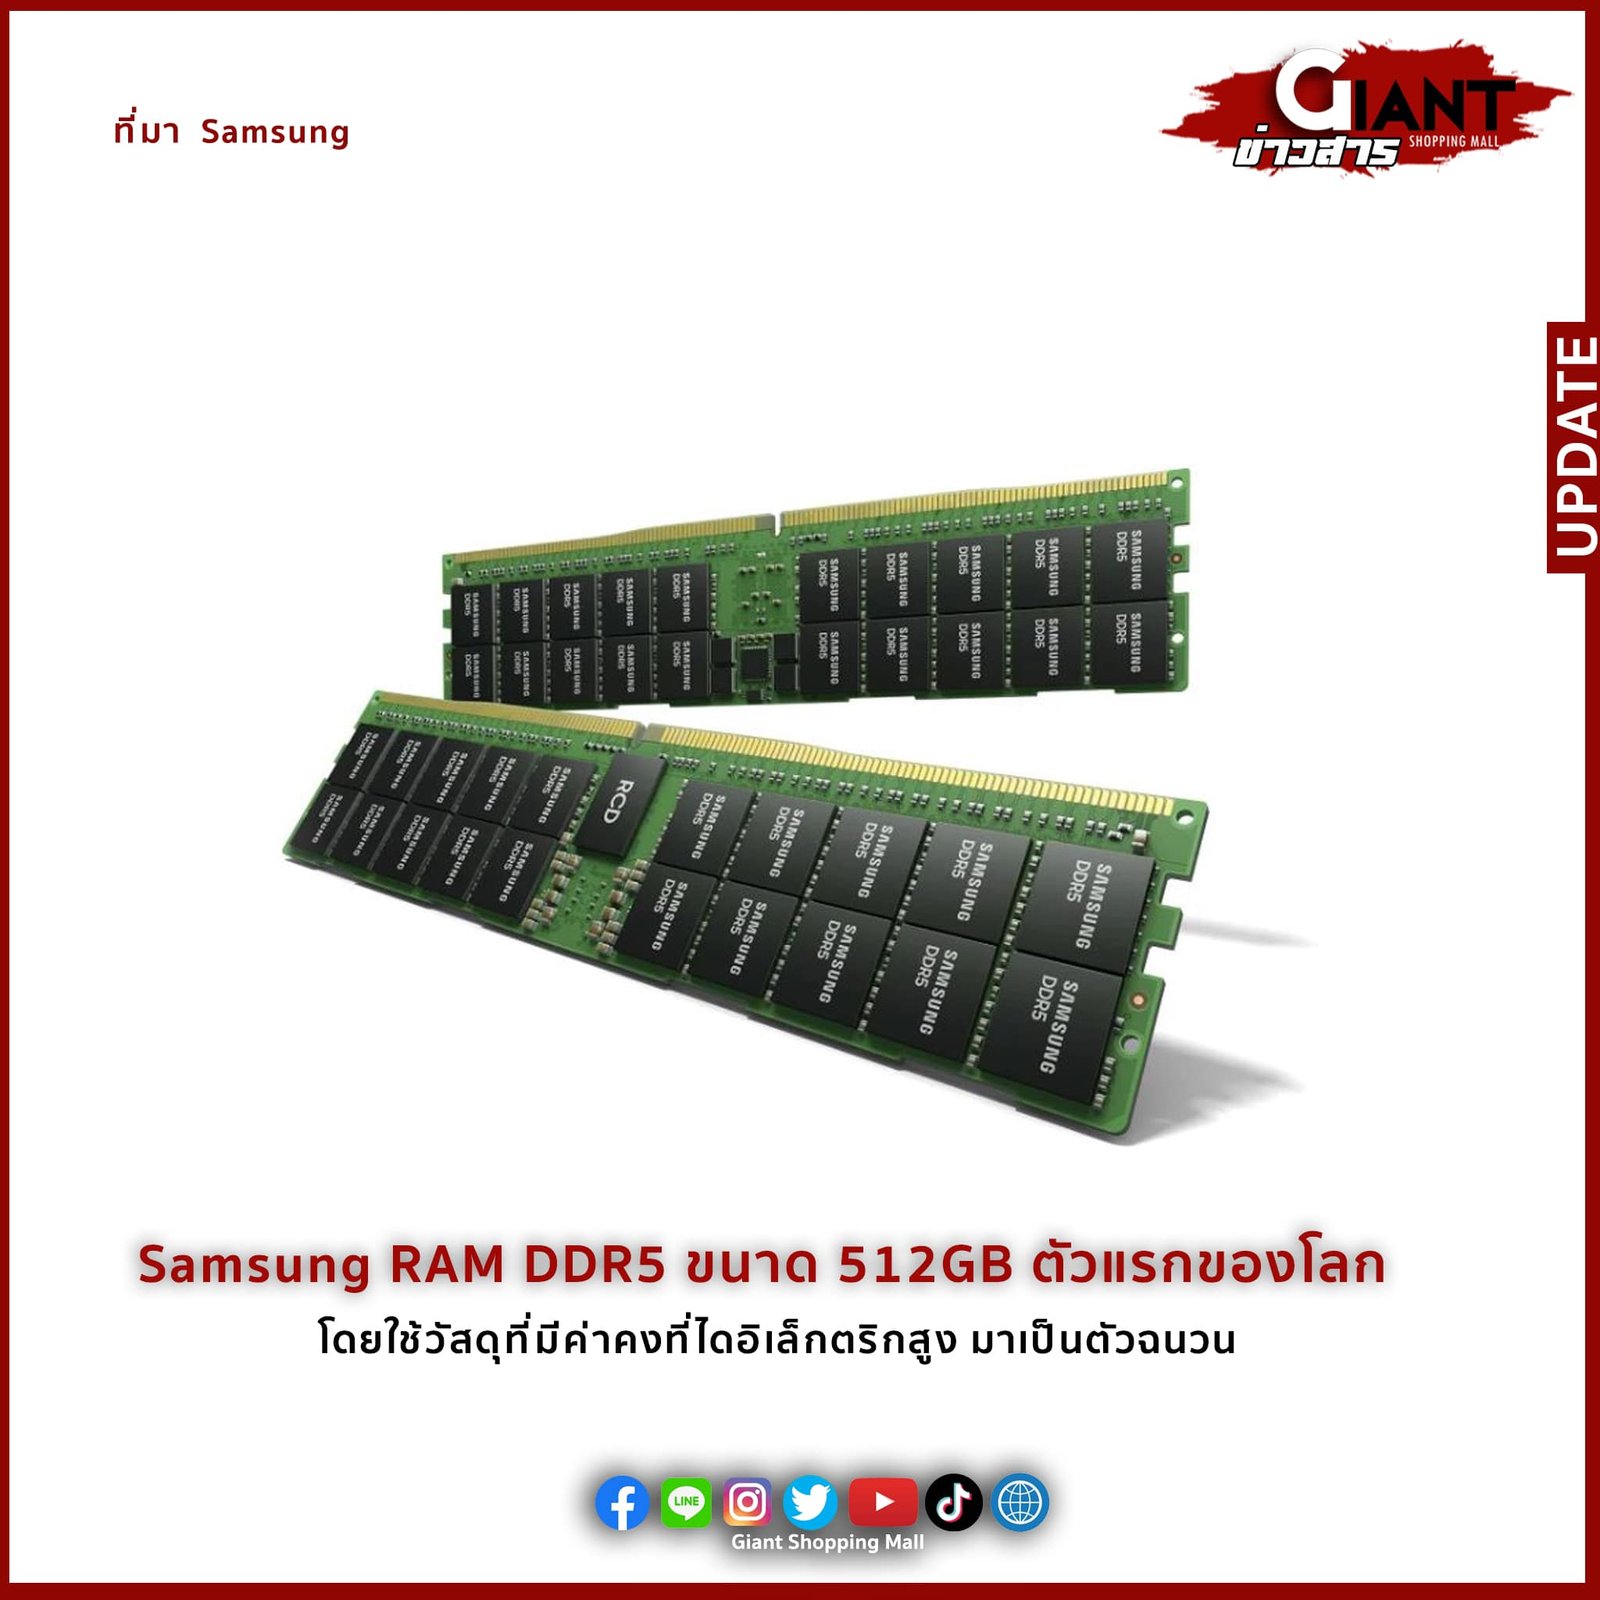 Samsung RAM DDR 5 ขนาด 512GB ตัวแรกของโลก